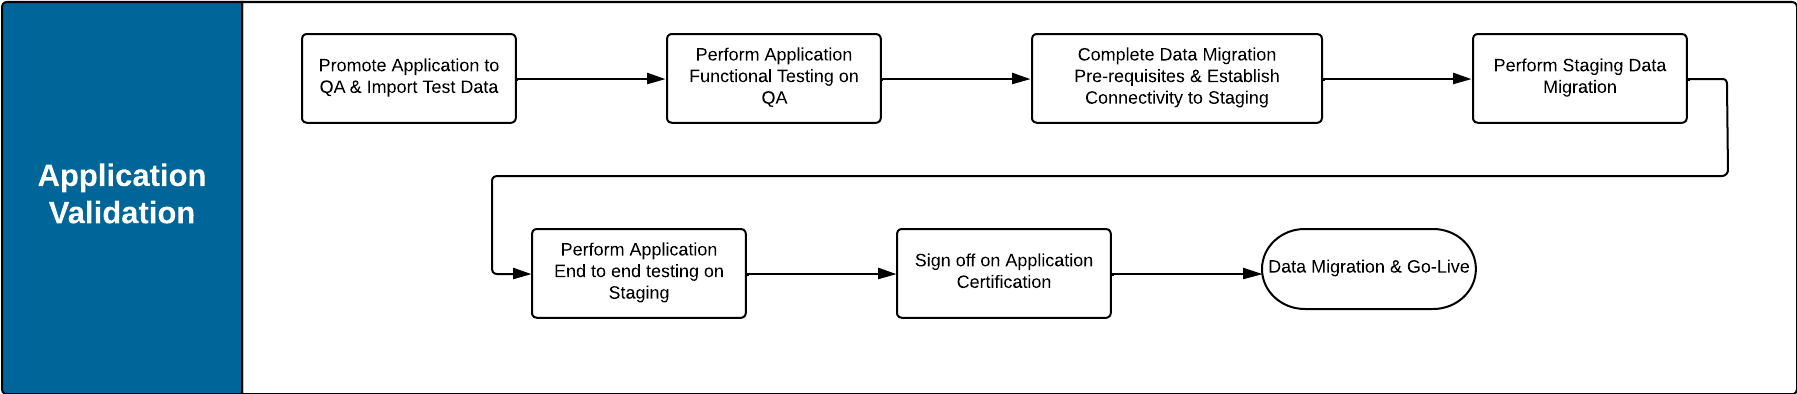 flow diagram of application validation